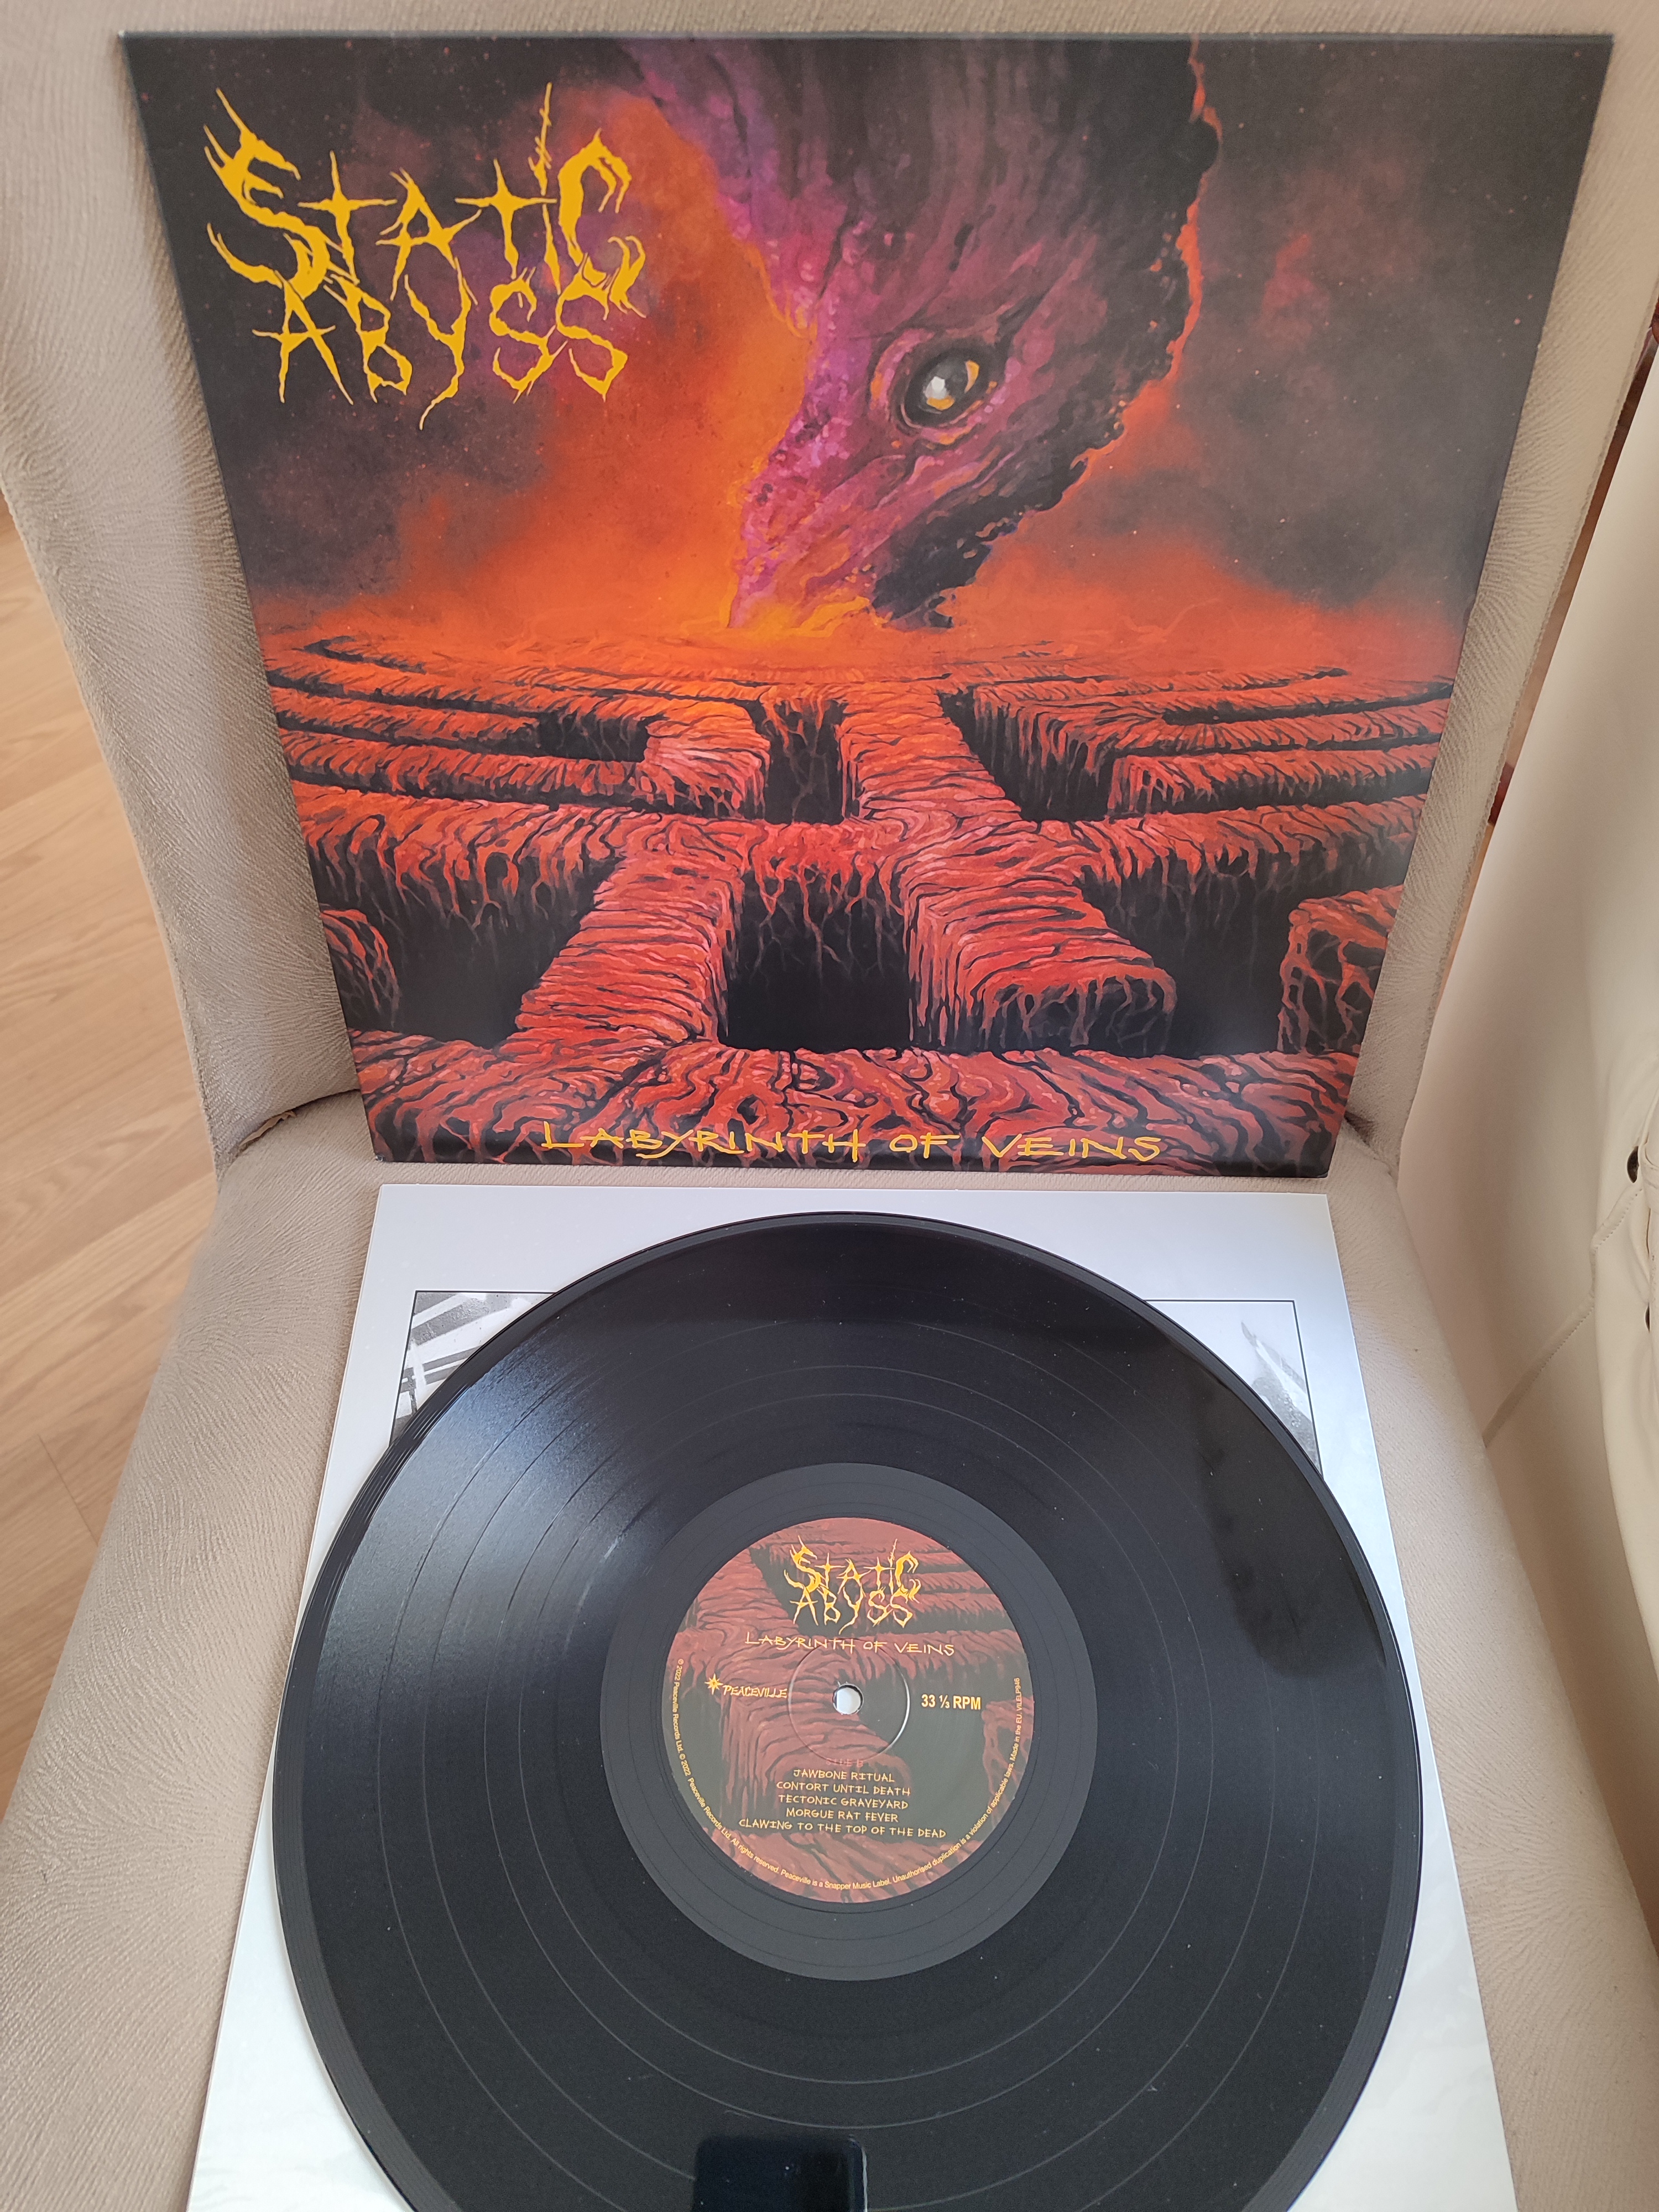 STATIC ABYSS ‎– Labyrinth Of Veins - 2022 Europe Basım 33 lük LP Plak - Death  Metal - Temiz 2. el